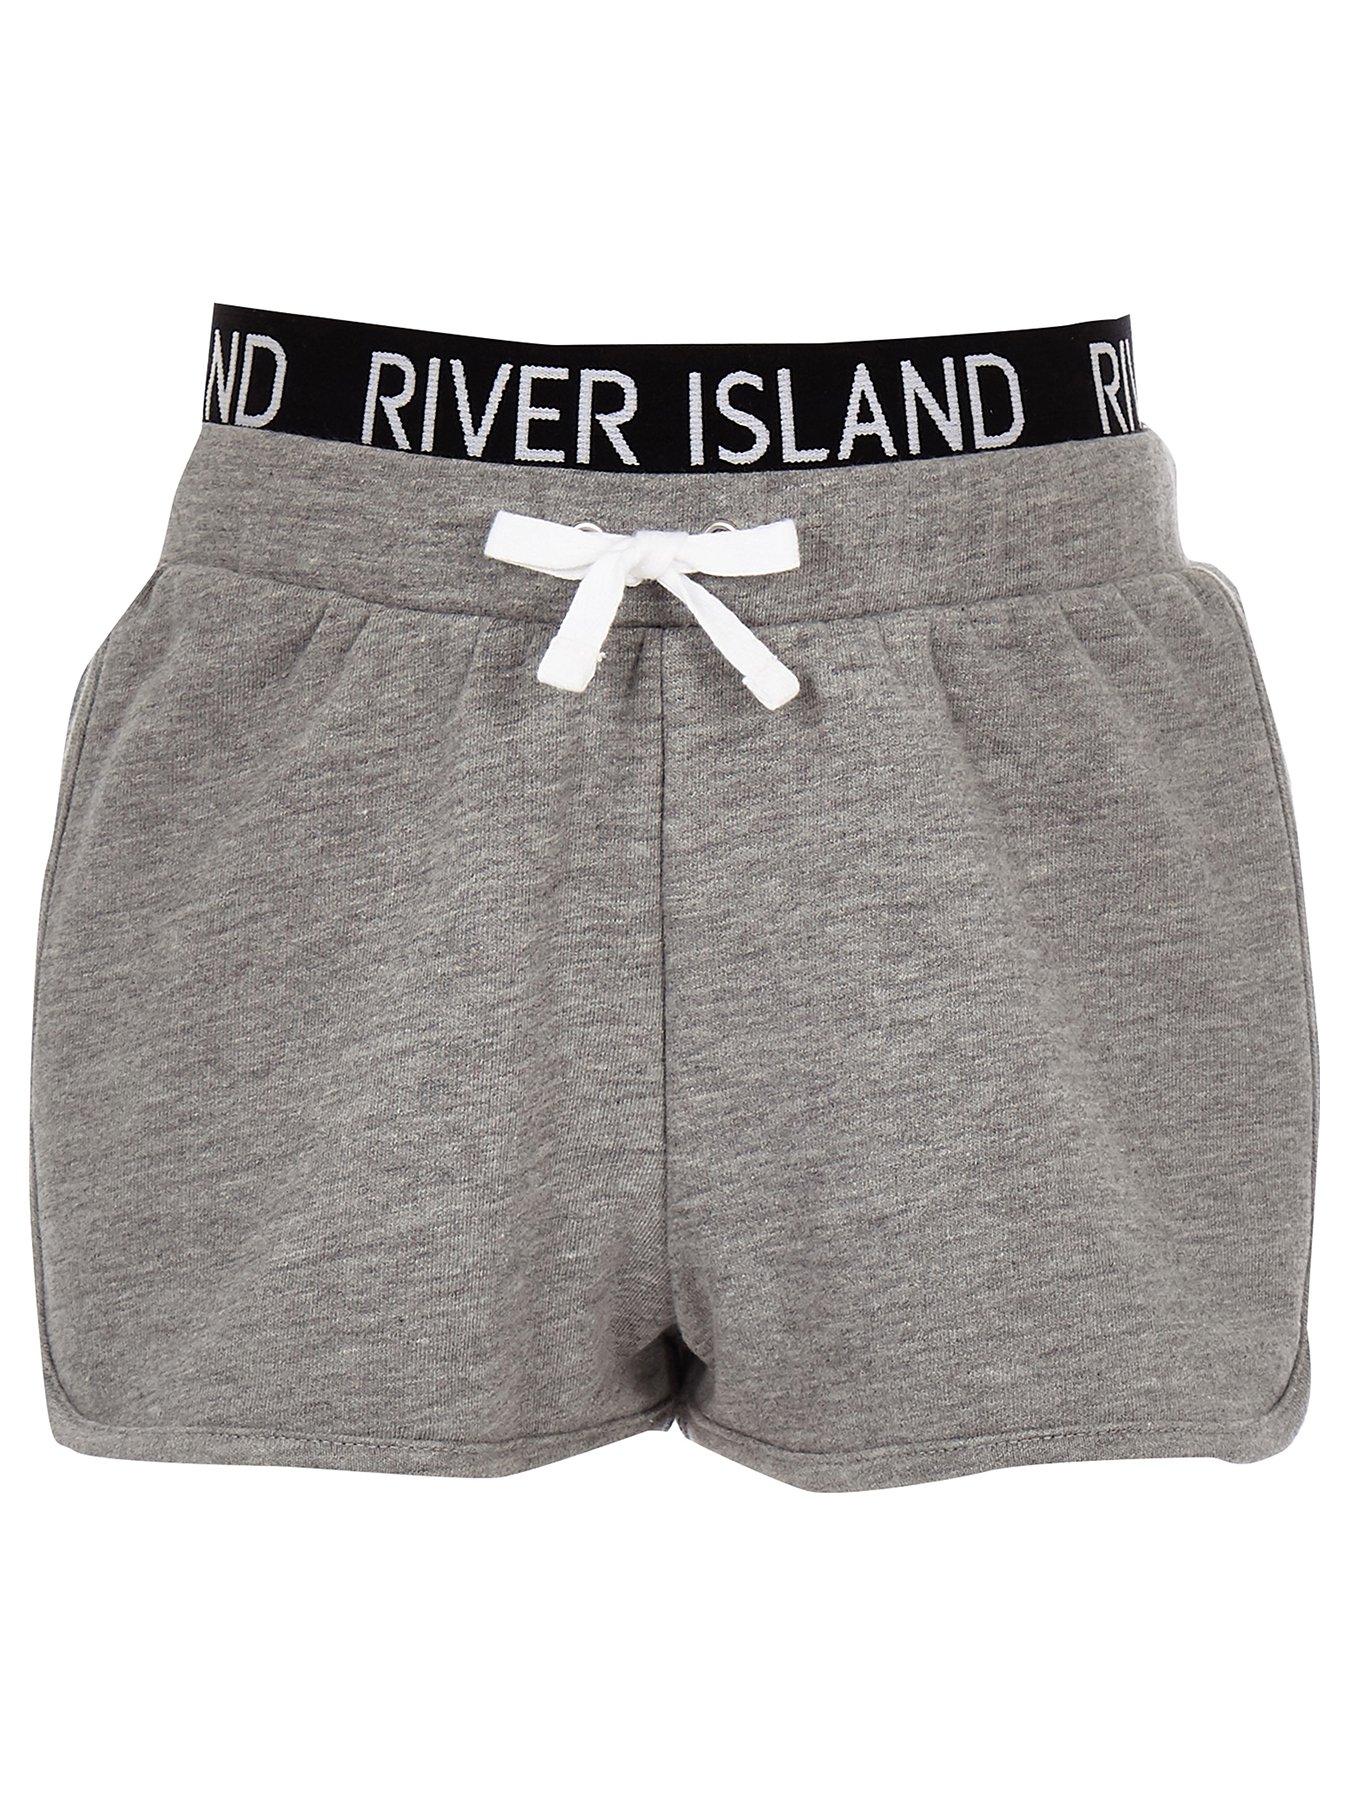 river island girls shorts